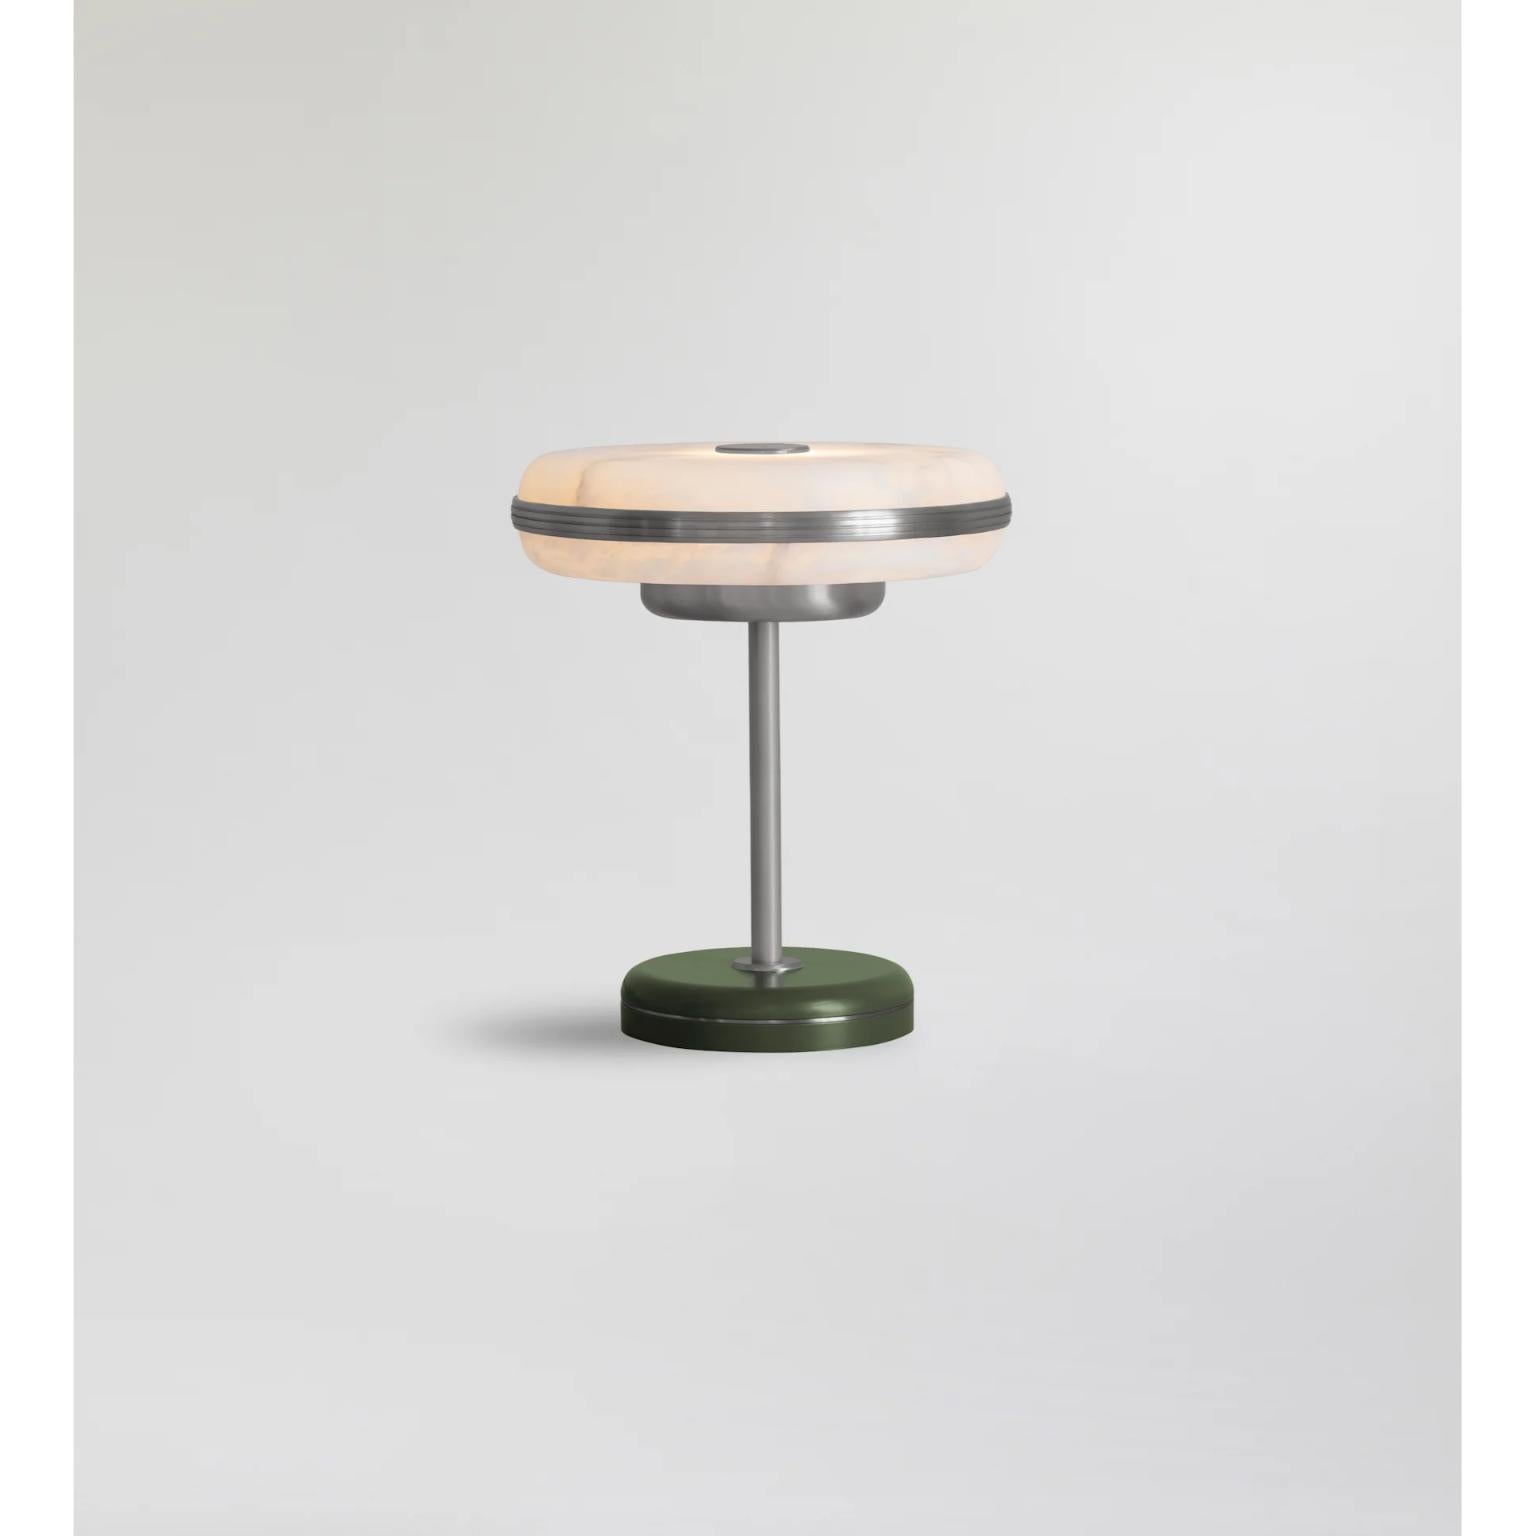 Beran Satin Nickel Small Table Lamp by Bert Frank